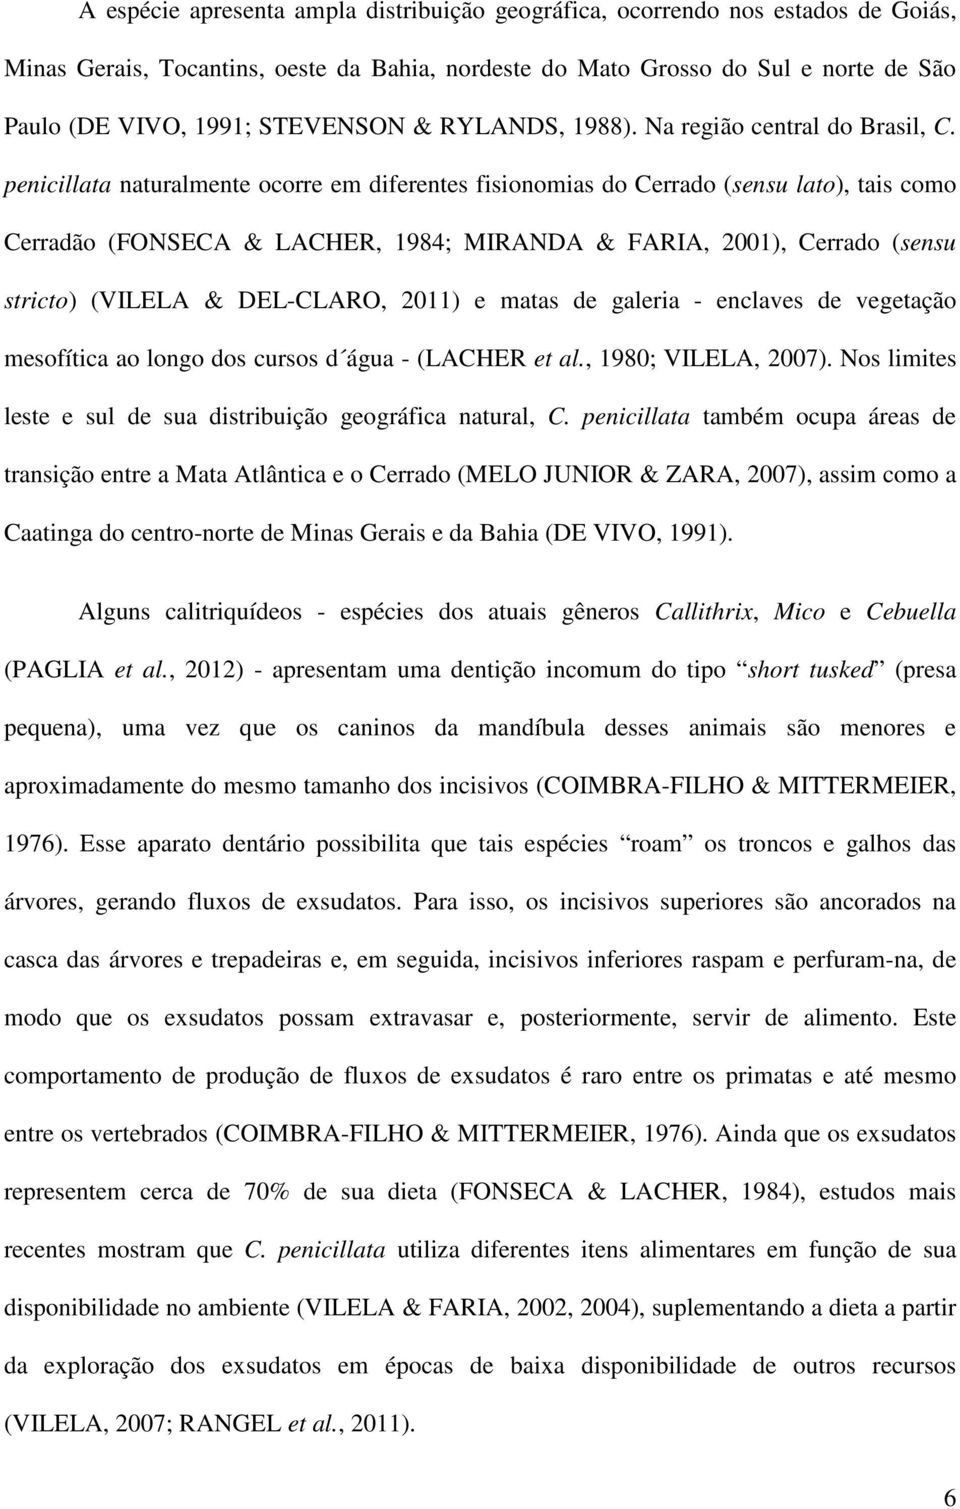 penicillata naturalmente ocorre em diferentes fisionomias do Cerrado (sensu lato), tais como Cerradão (FONSECA & LACHER, 1984; MIRANDA & FARIA, 2001), Cerrado (sensu stricto) (VILELA & DEL-CLARO,